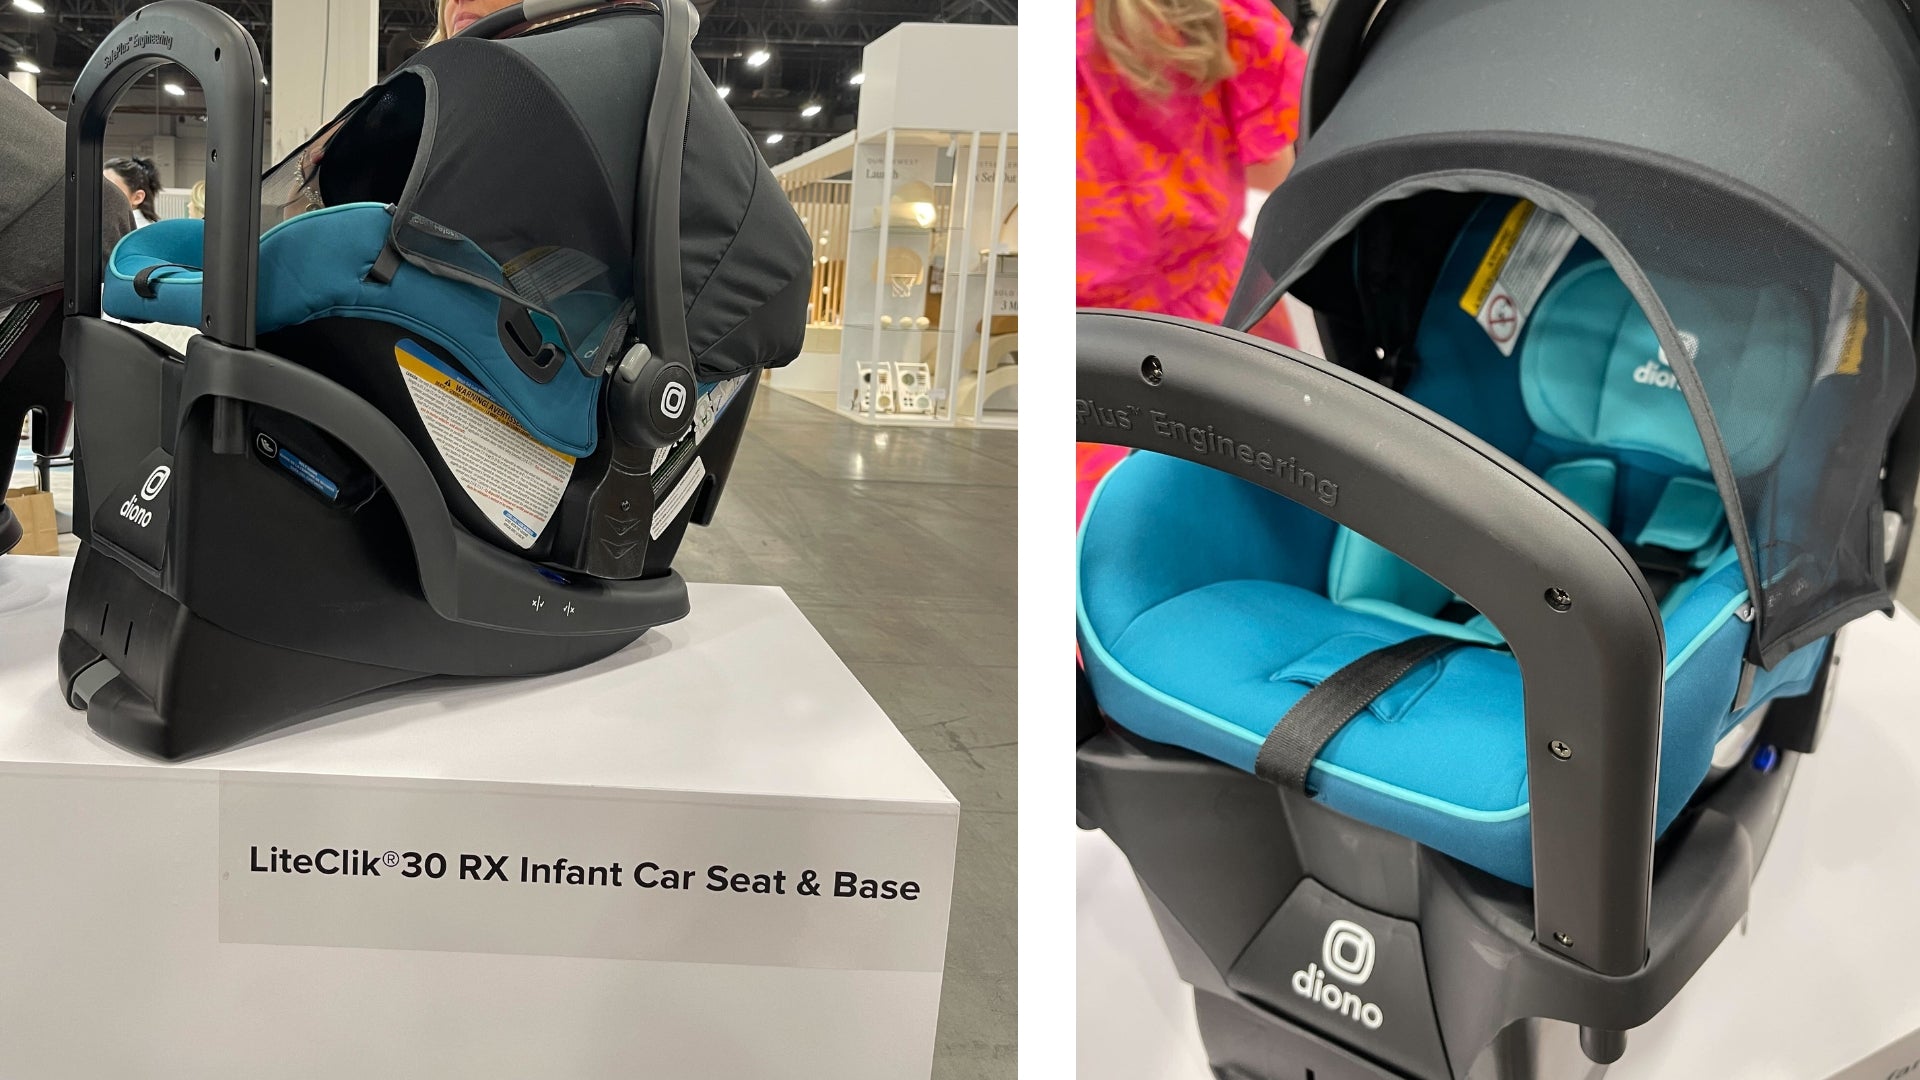 Diono LiteClik30 RX Infant Car Seat